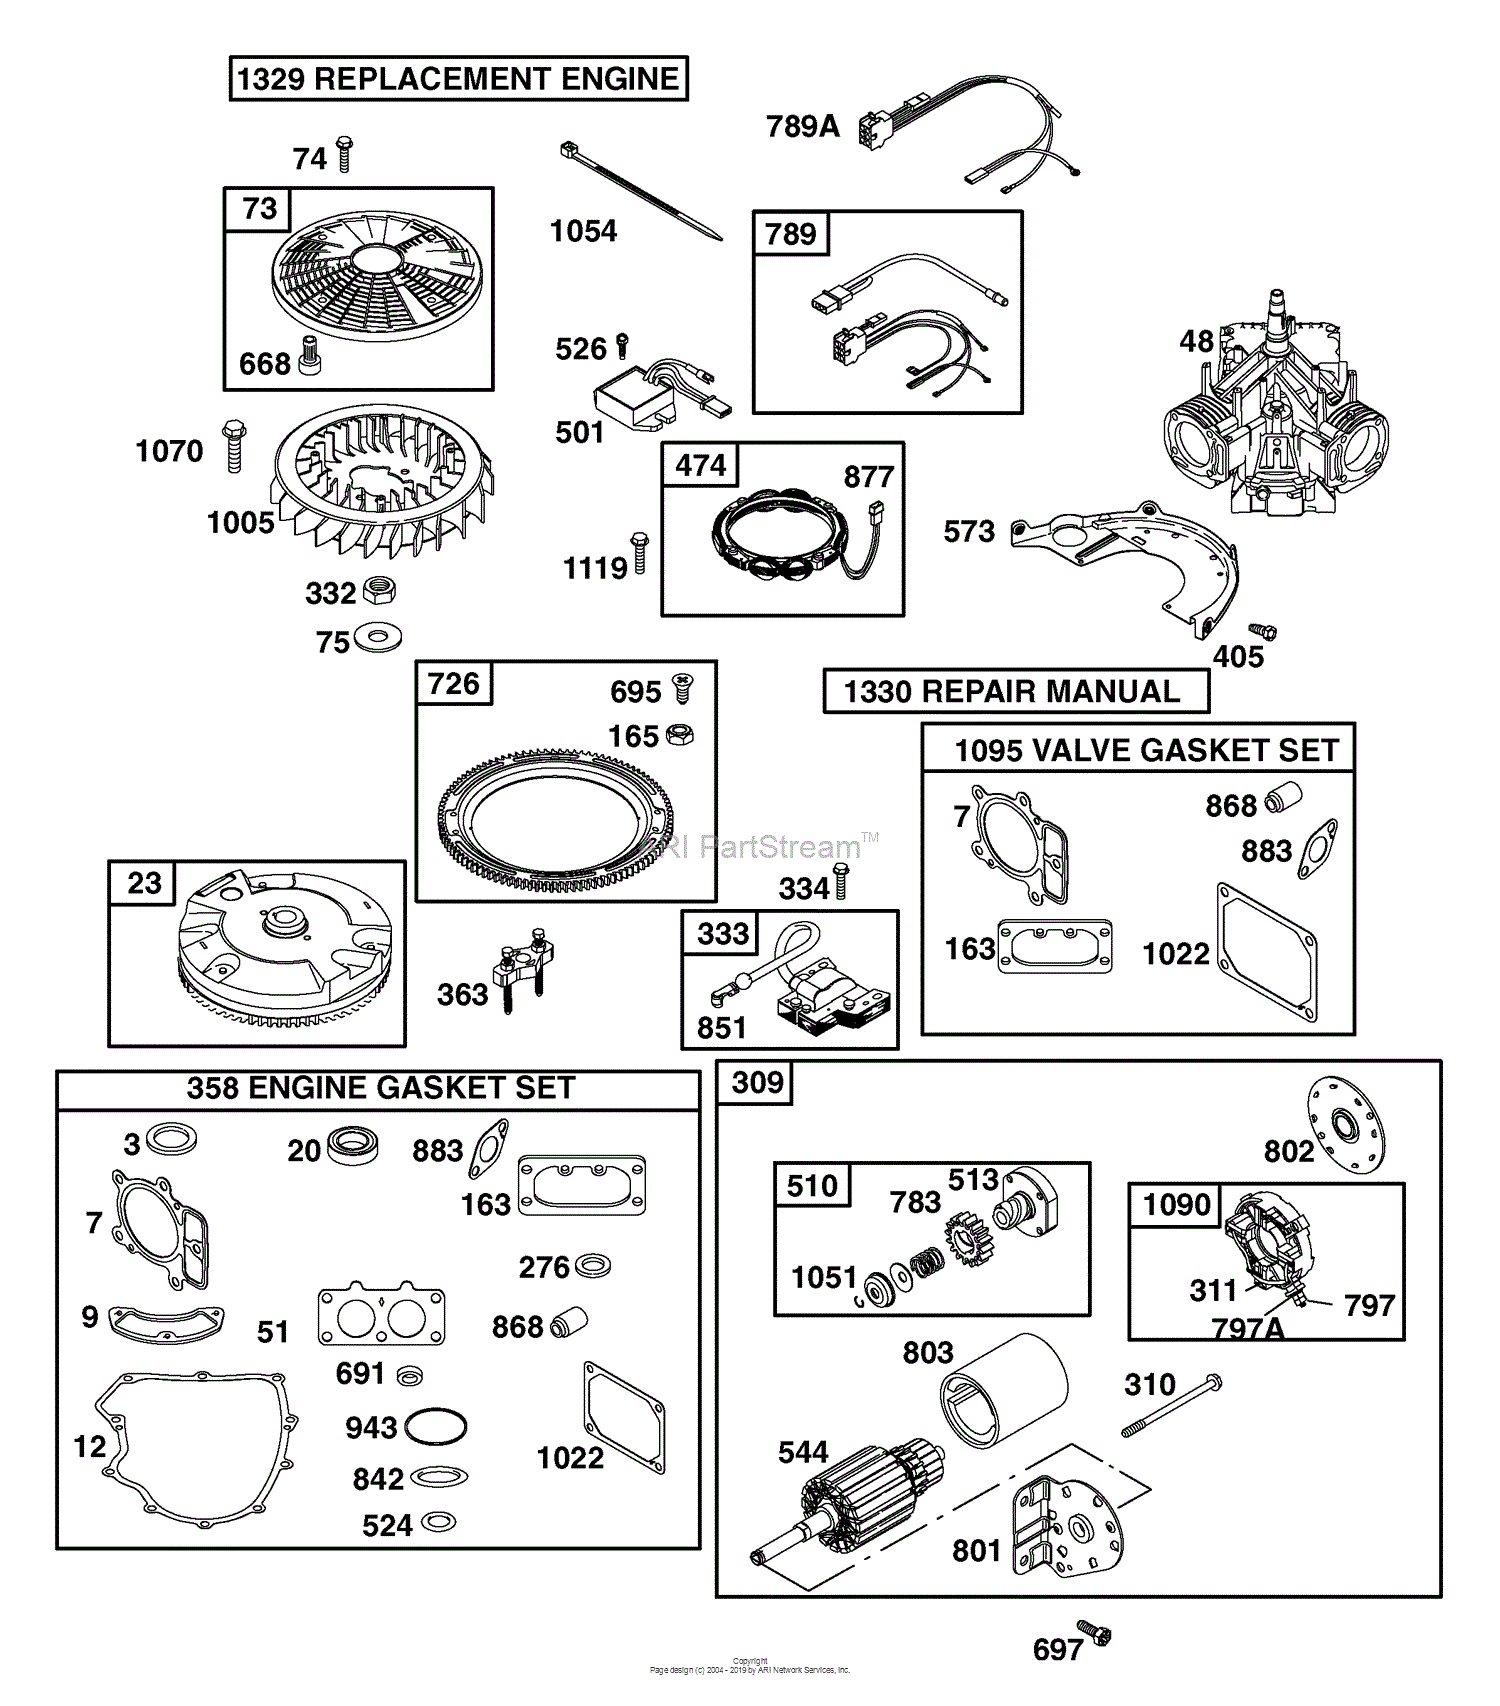 Husqvarna YTH 2454 T (917.279220) (2006-05) Parts Diagram ... john deere hydro 165 wiring diagram 